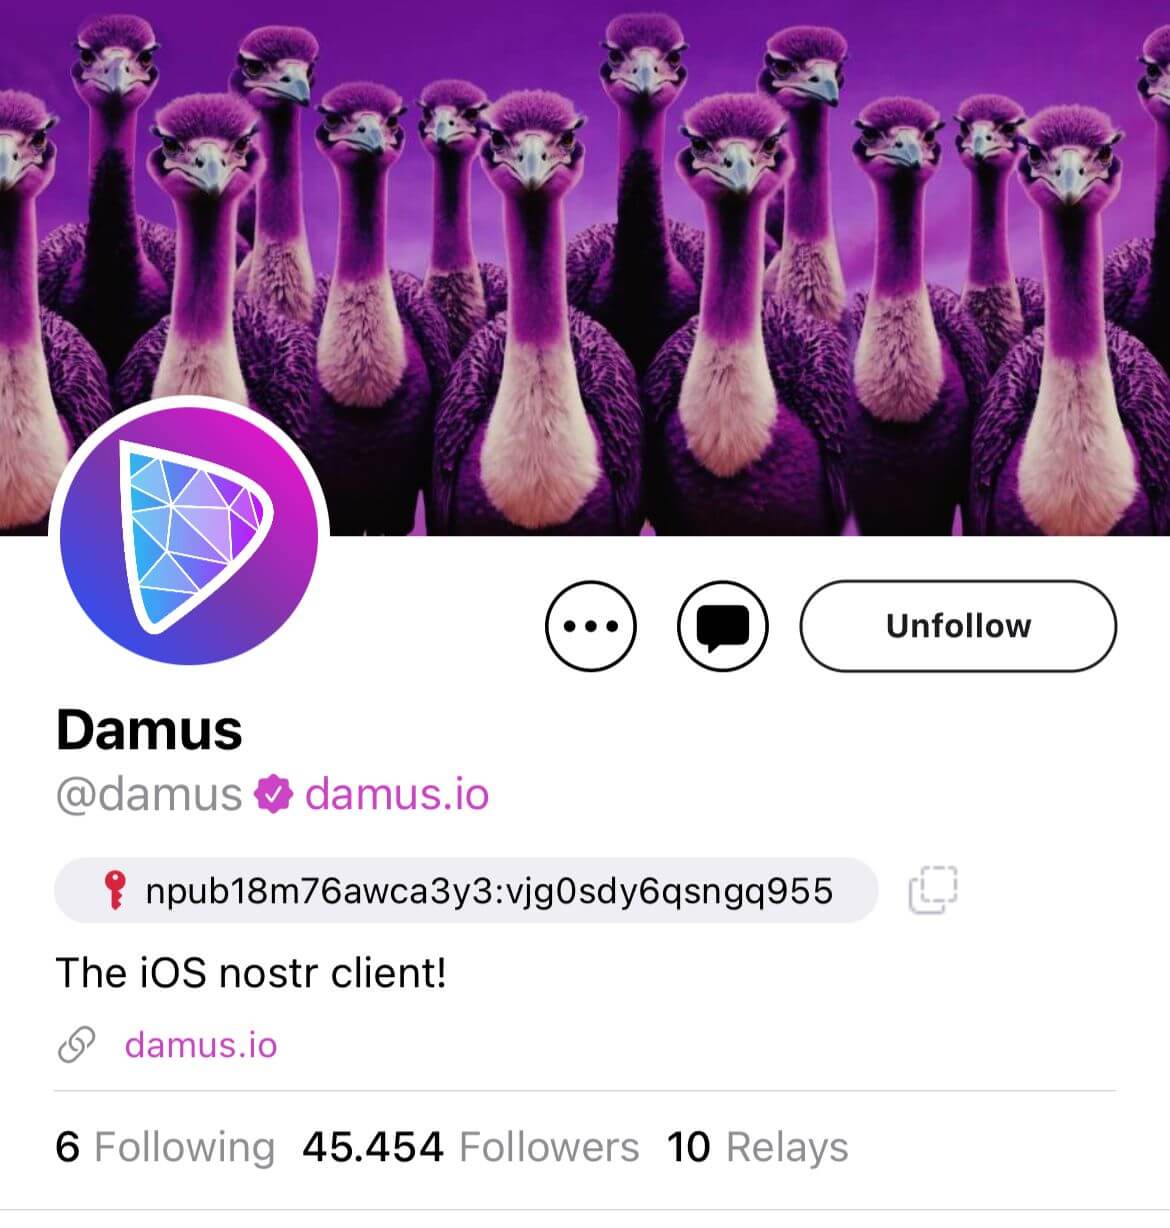 Damus social platform hits 45K members on first day